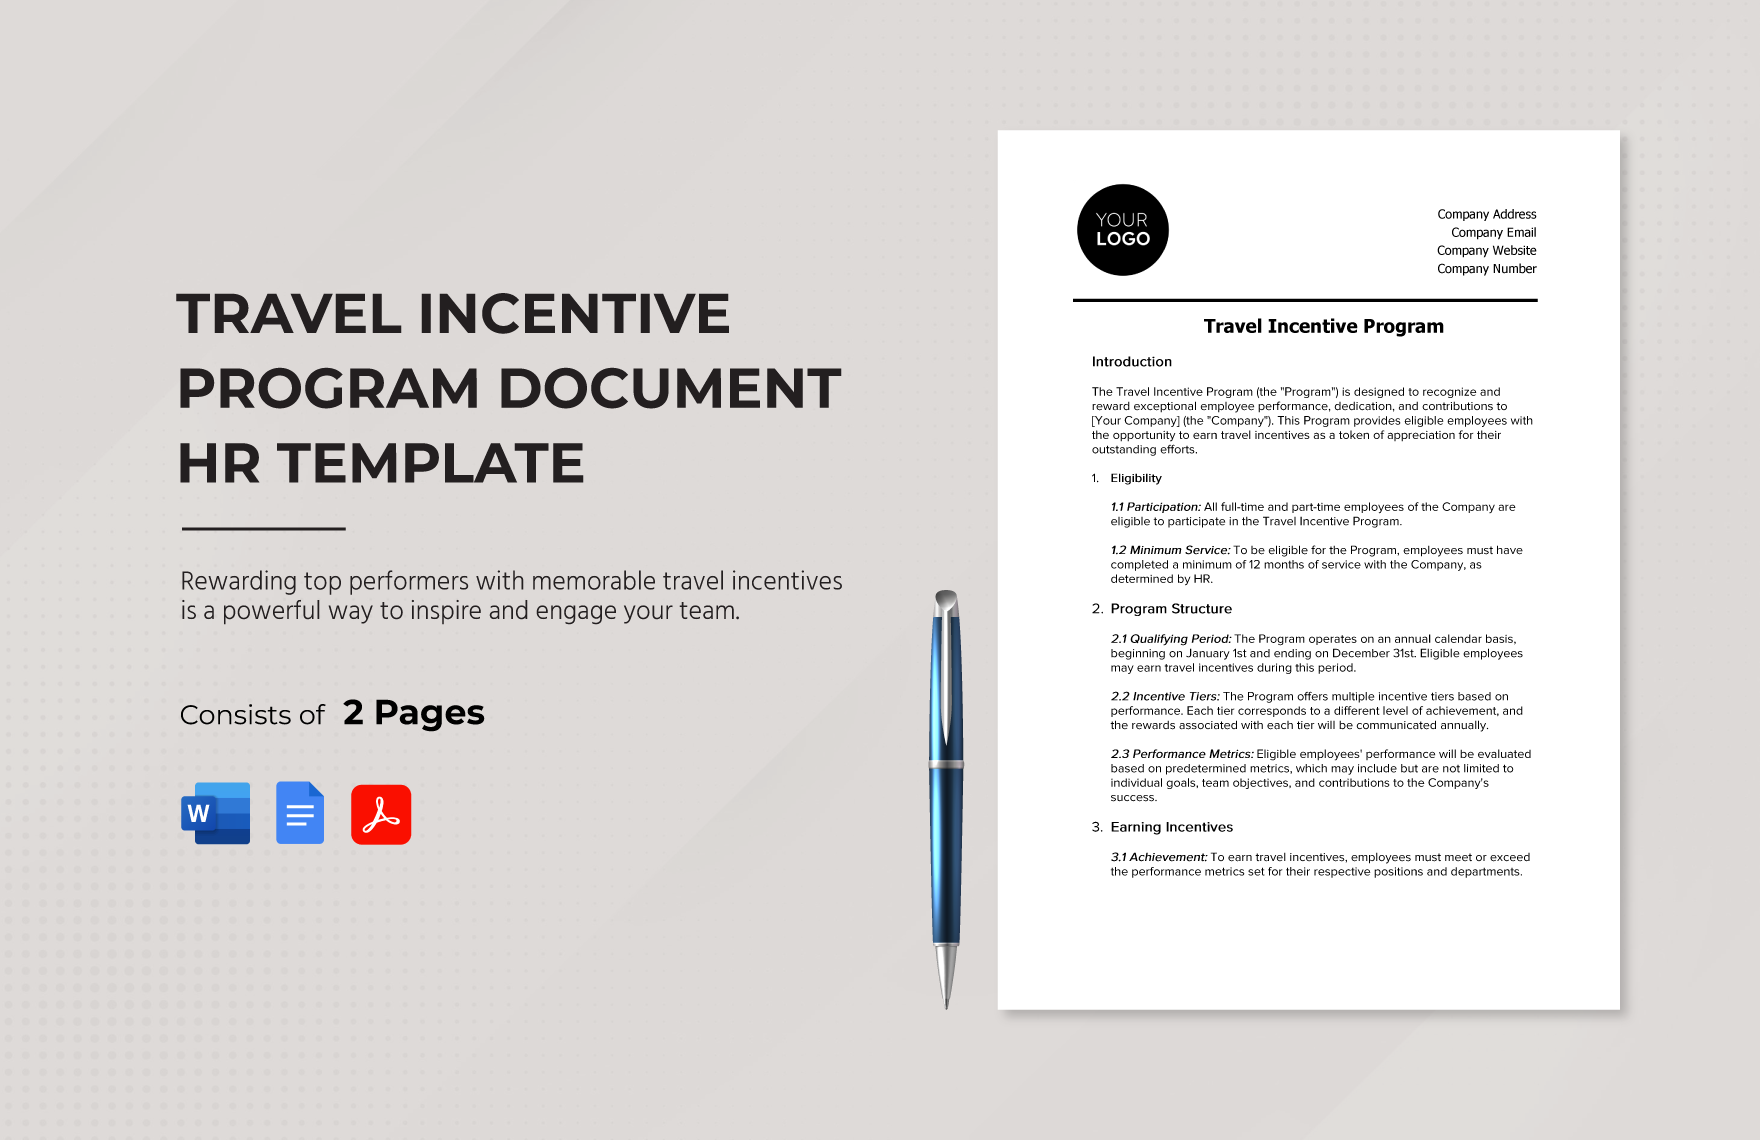 Travel Incentive Program Document HR Template